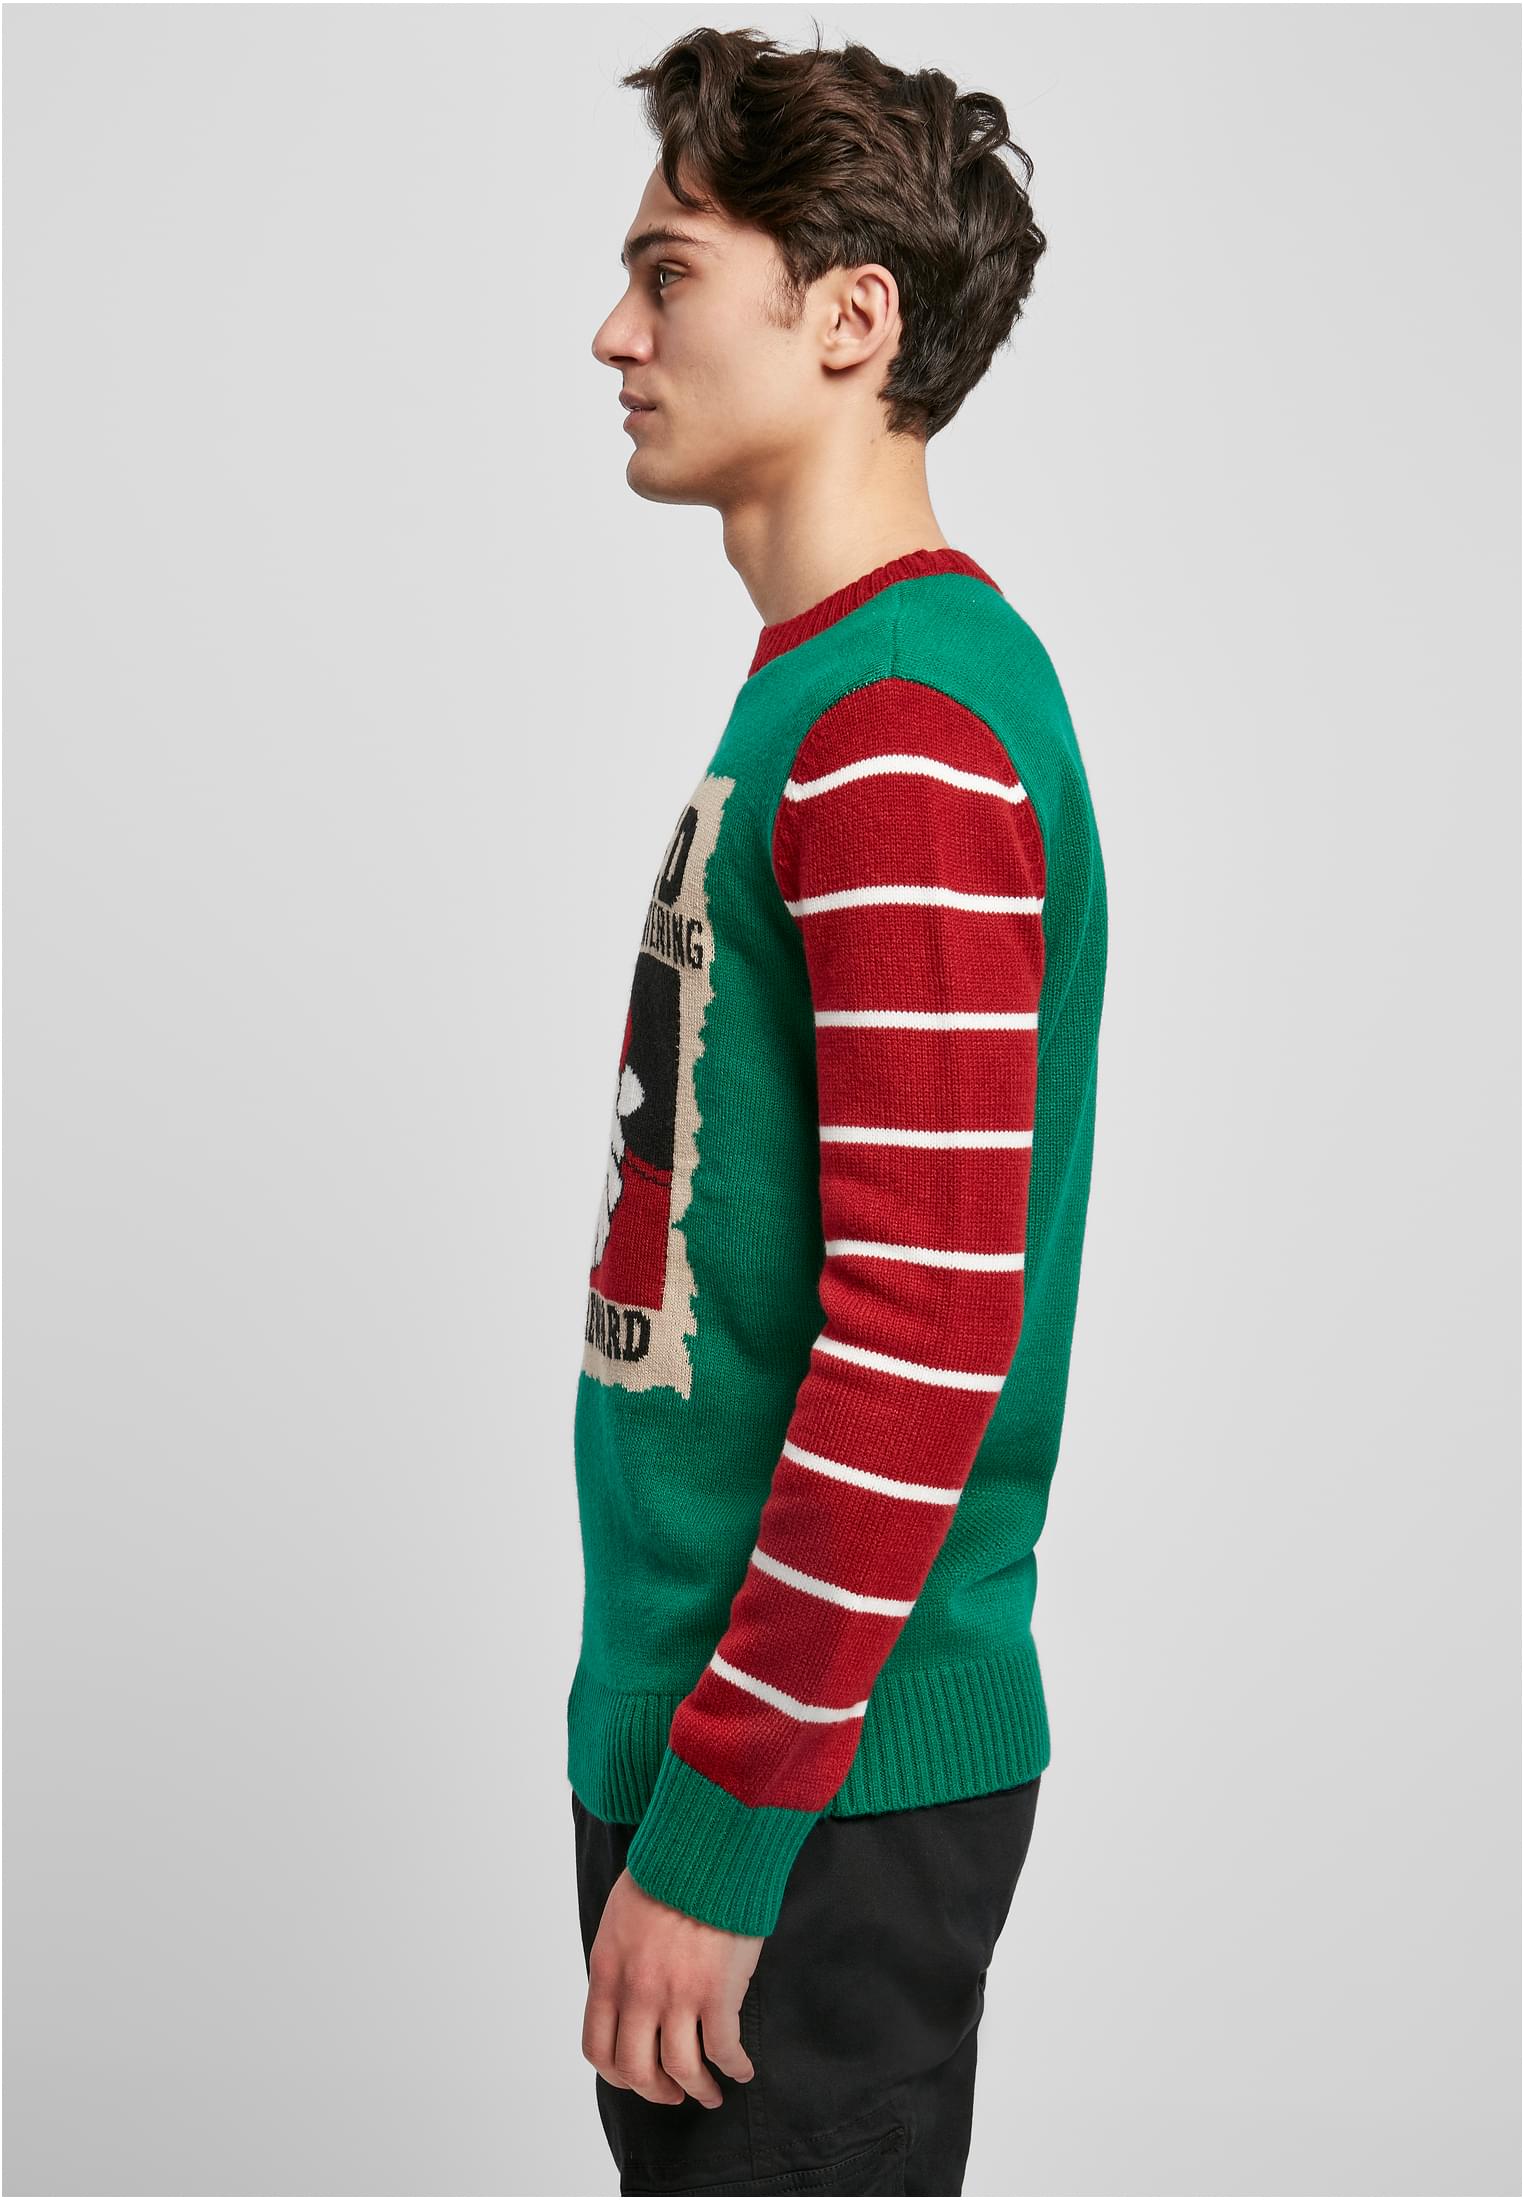 Crewnecks Wanted Christmas Sweater in Farbe x-masgreen/white